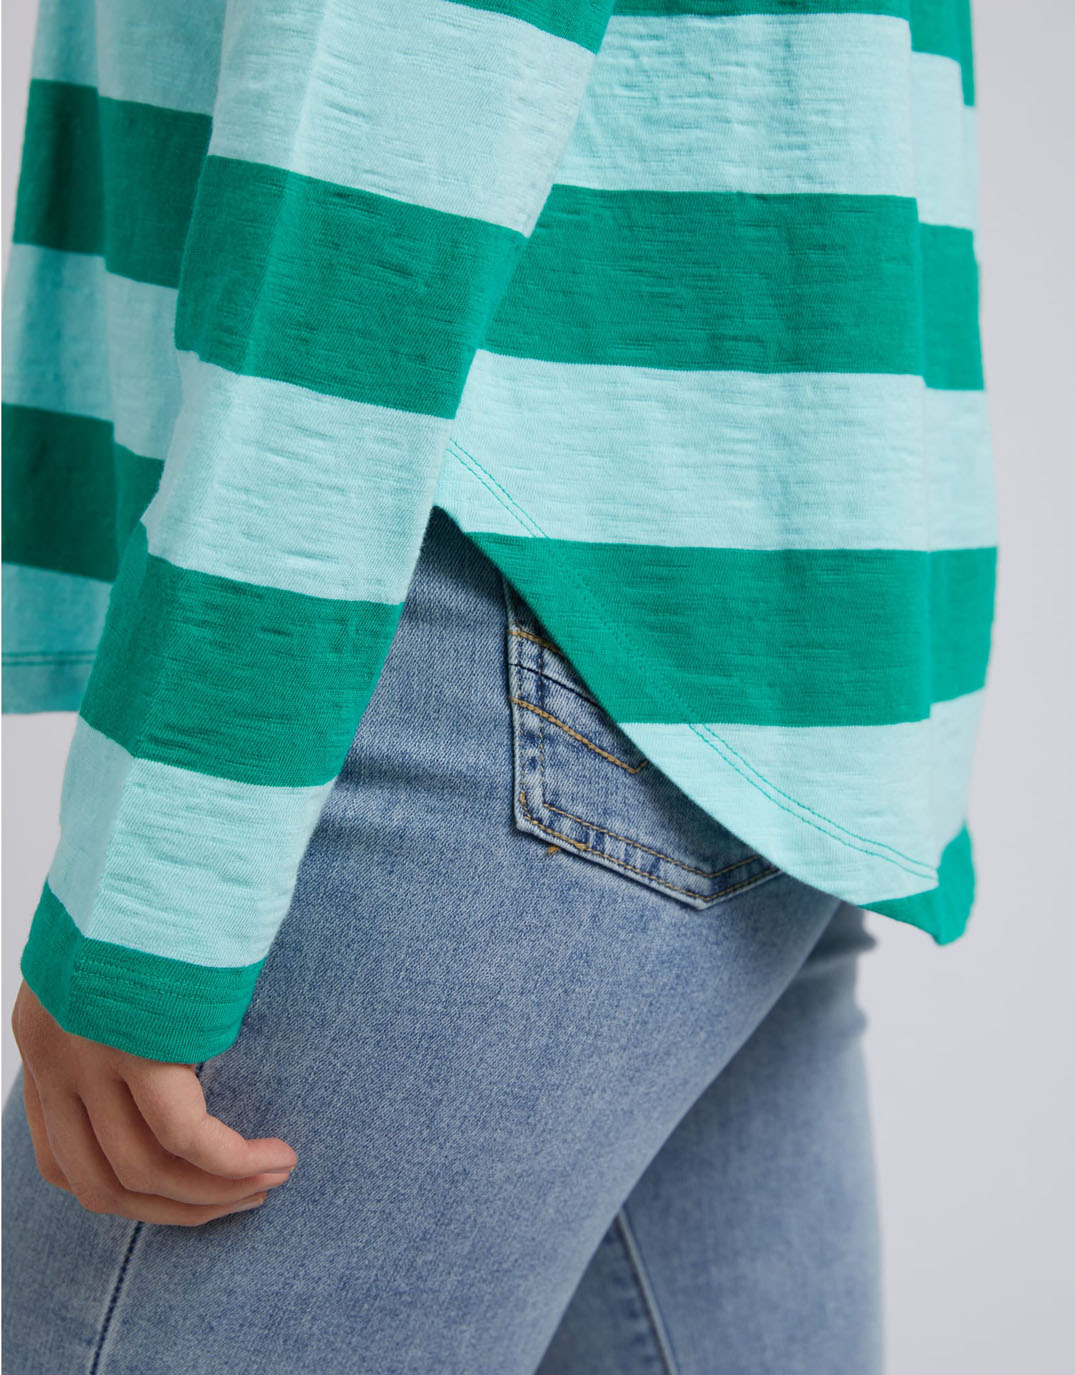 elm-spritz-stripe-long-sleeve-tee-goodness-green-stripe-womens-clothing